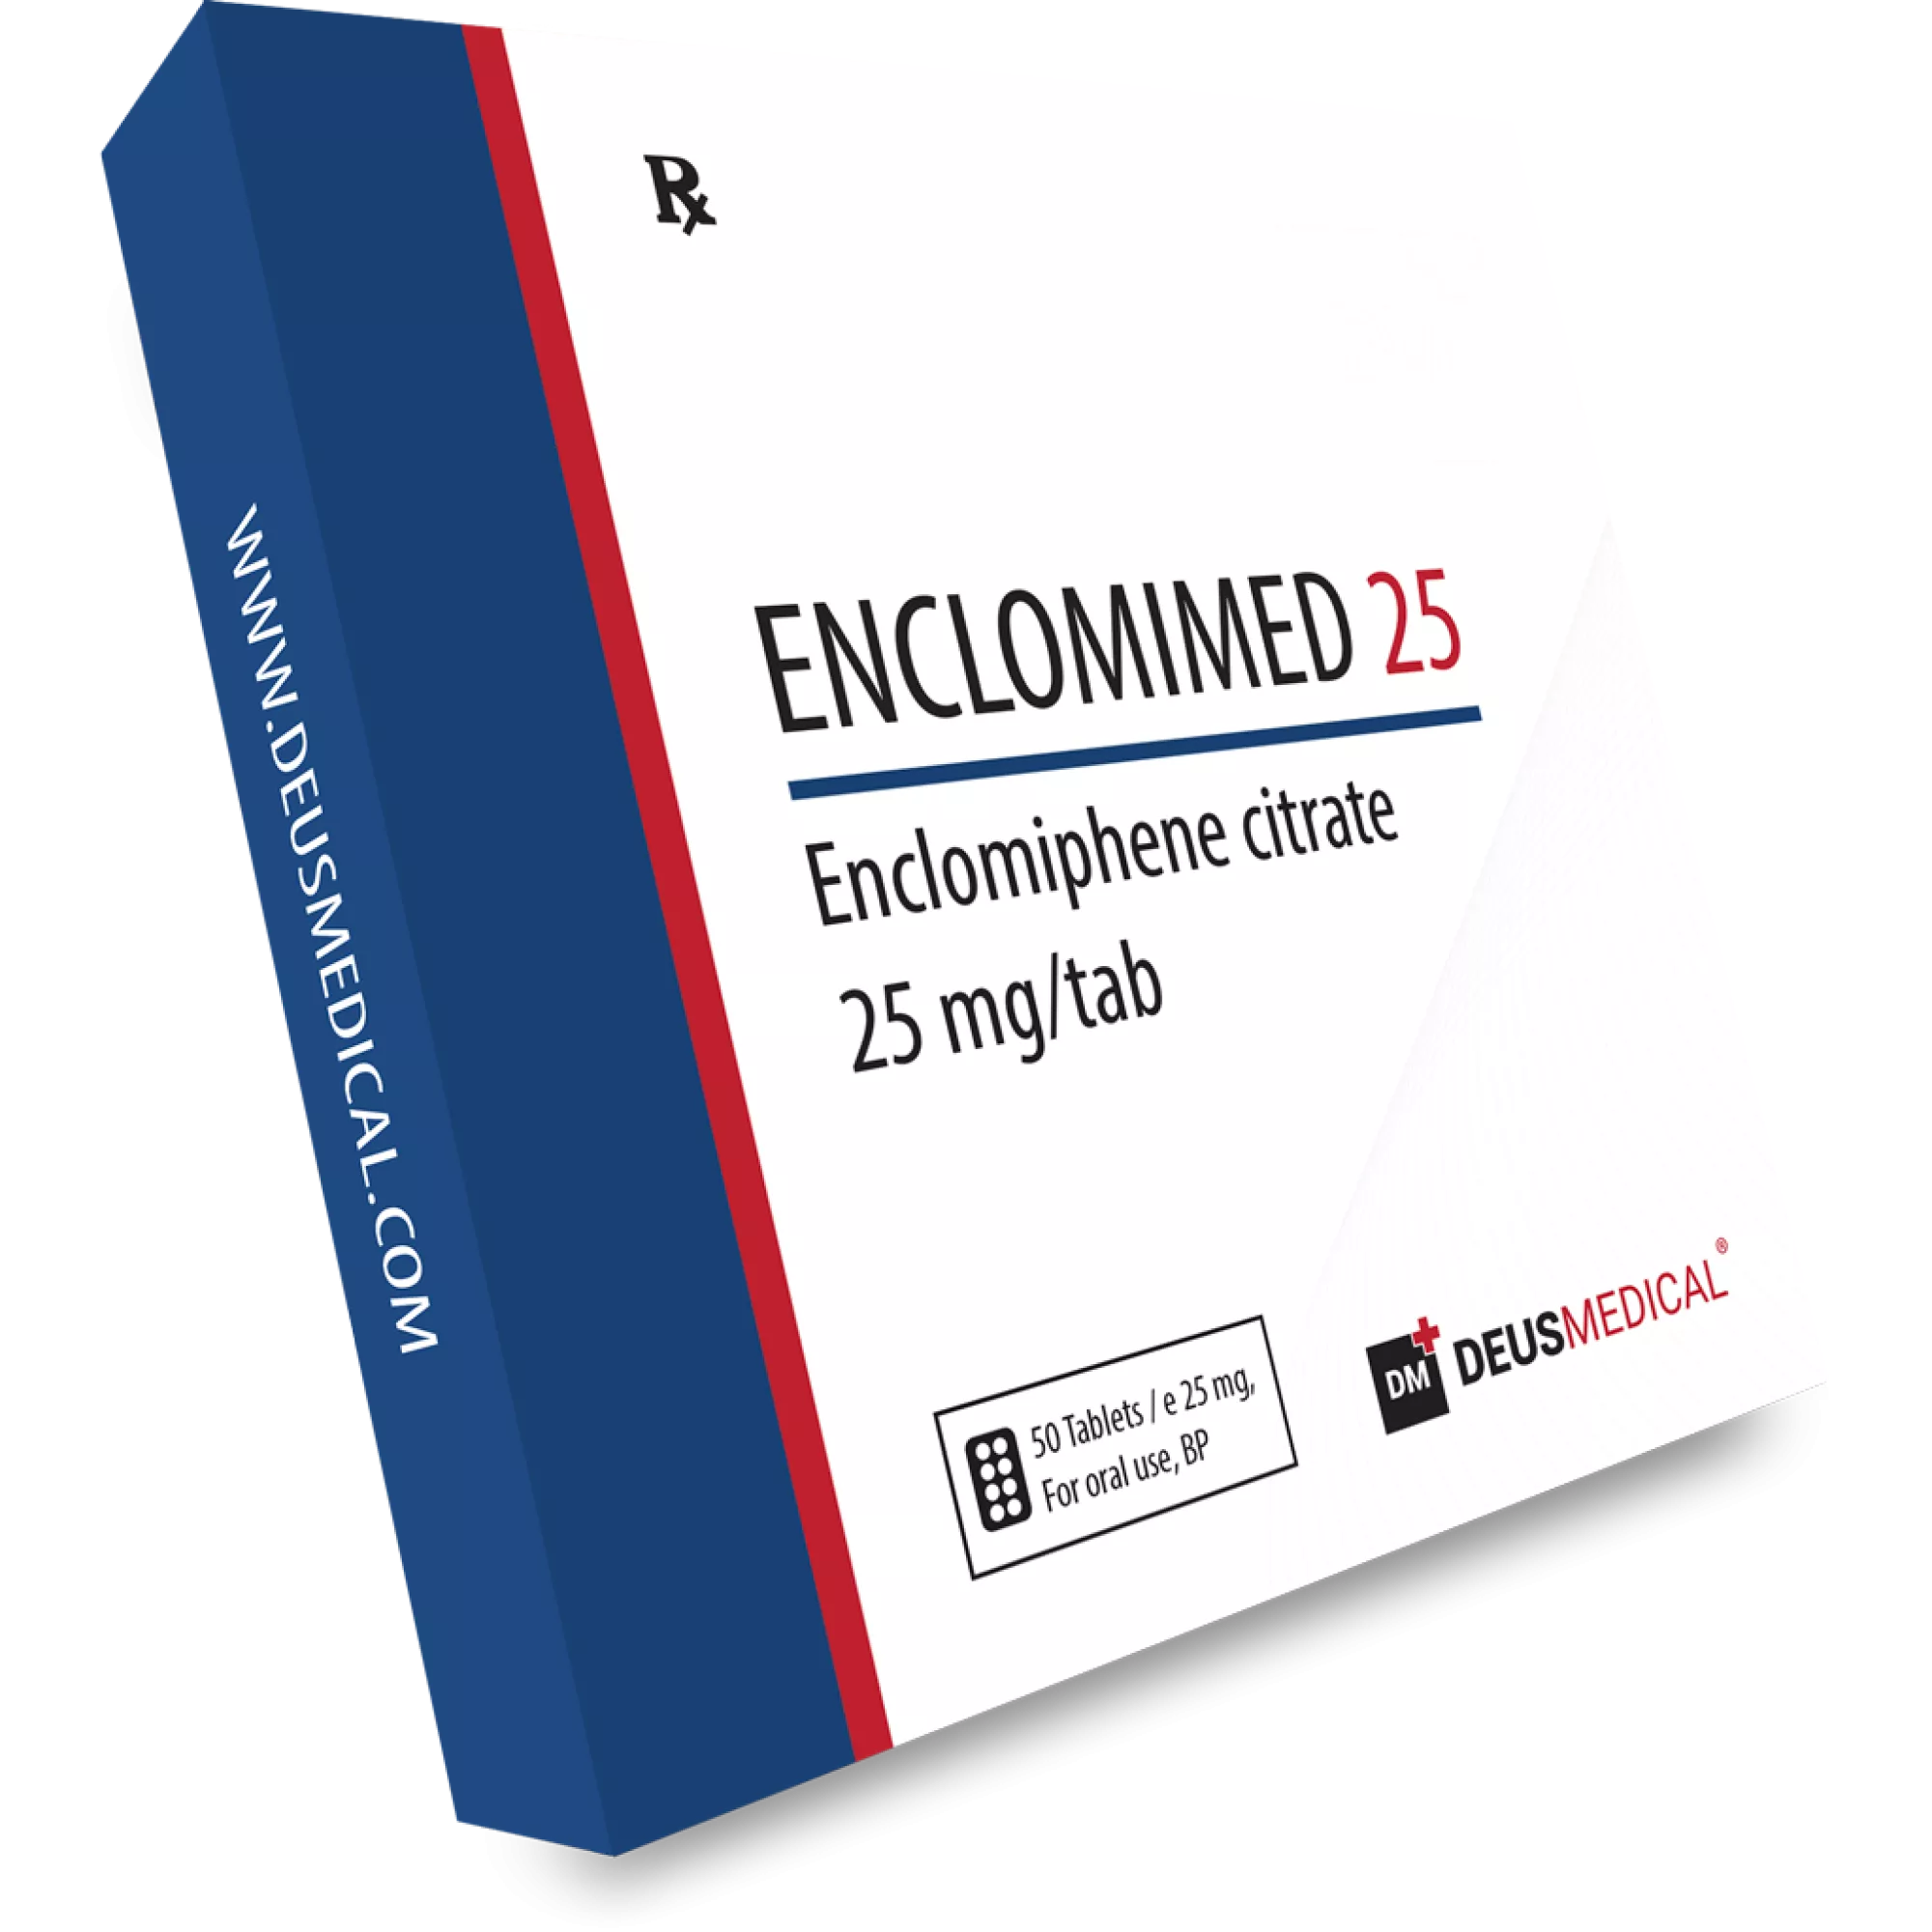 ENCLOMIMED 25 (Enclomiphene Citrate), Deus Medical, Buy Steroids Online - www.deuspower.shop